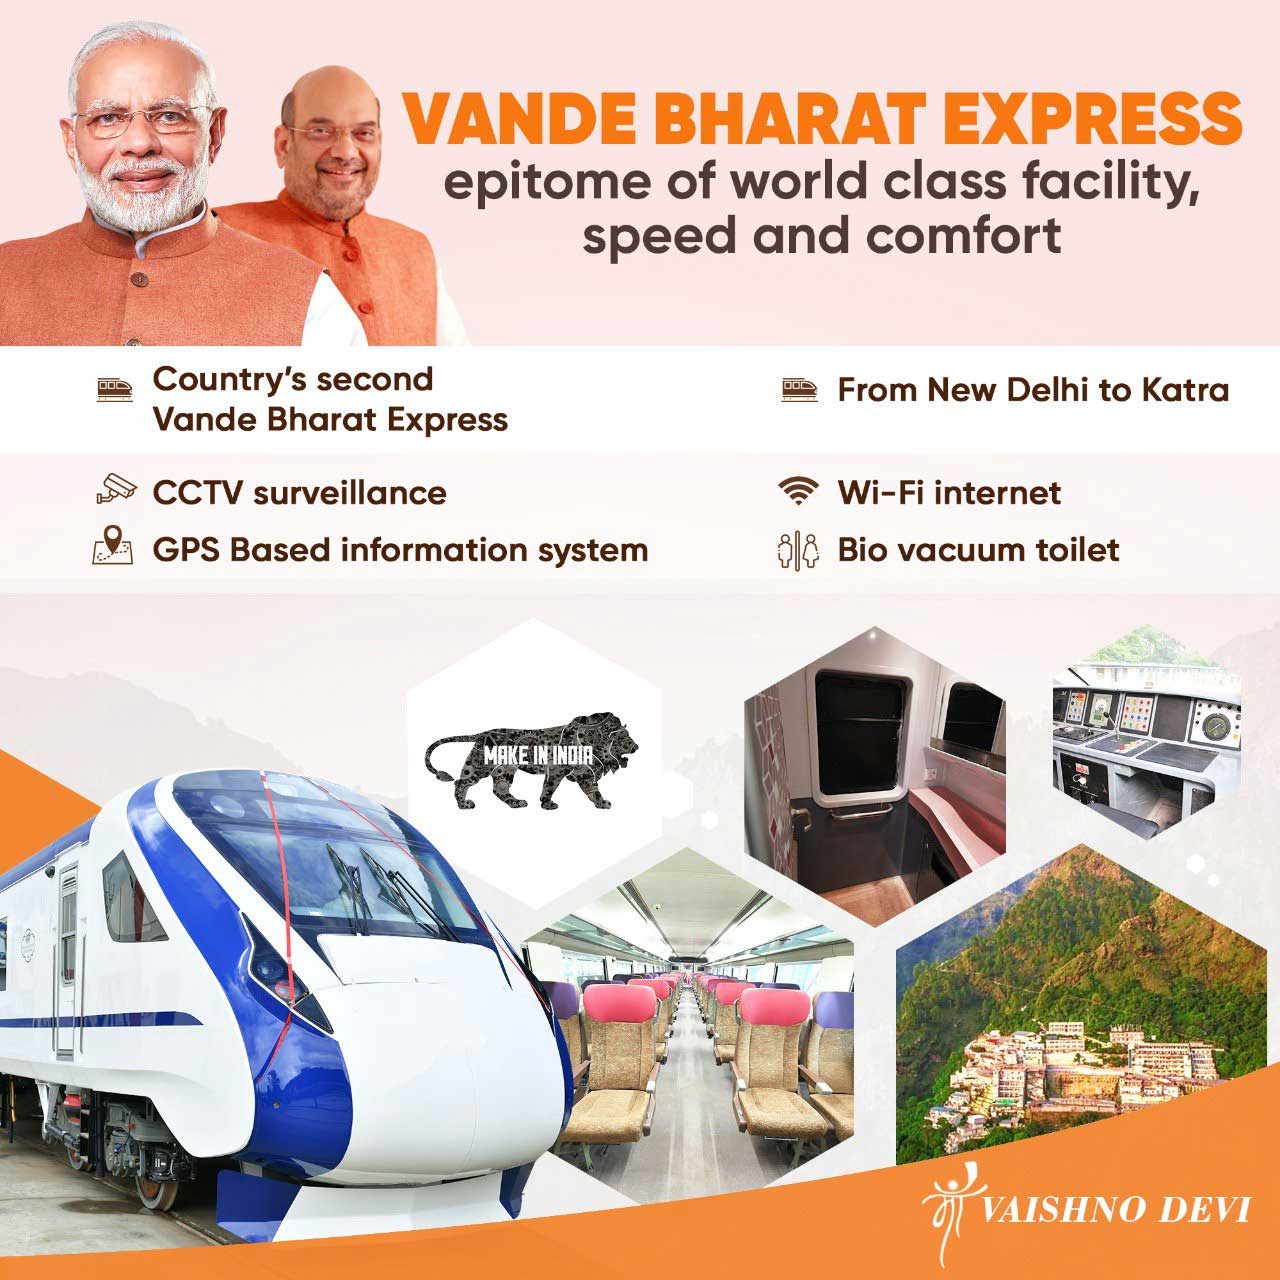 Vande Bharat Express realizes Gandhiji's vision of Swadeshi and fillips Narendra Modi's Make in India